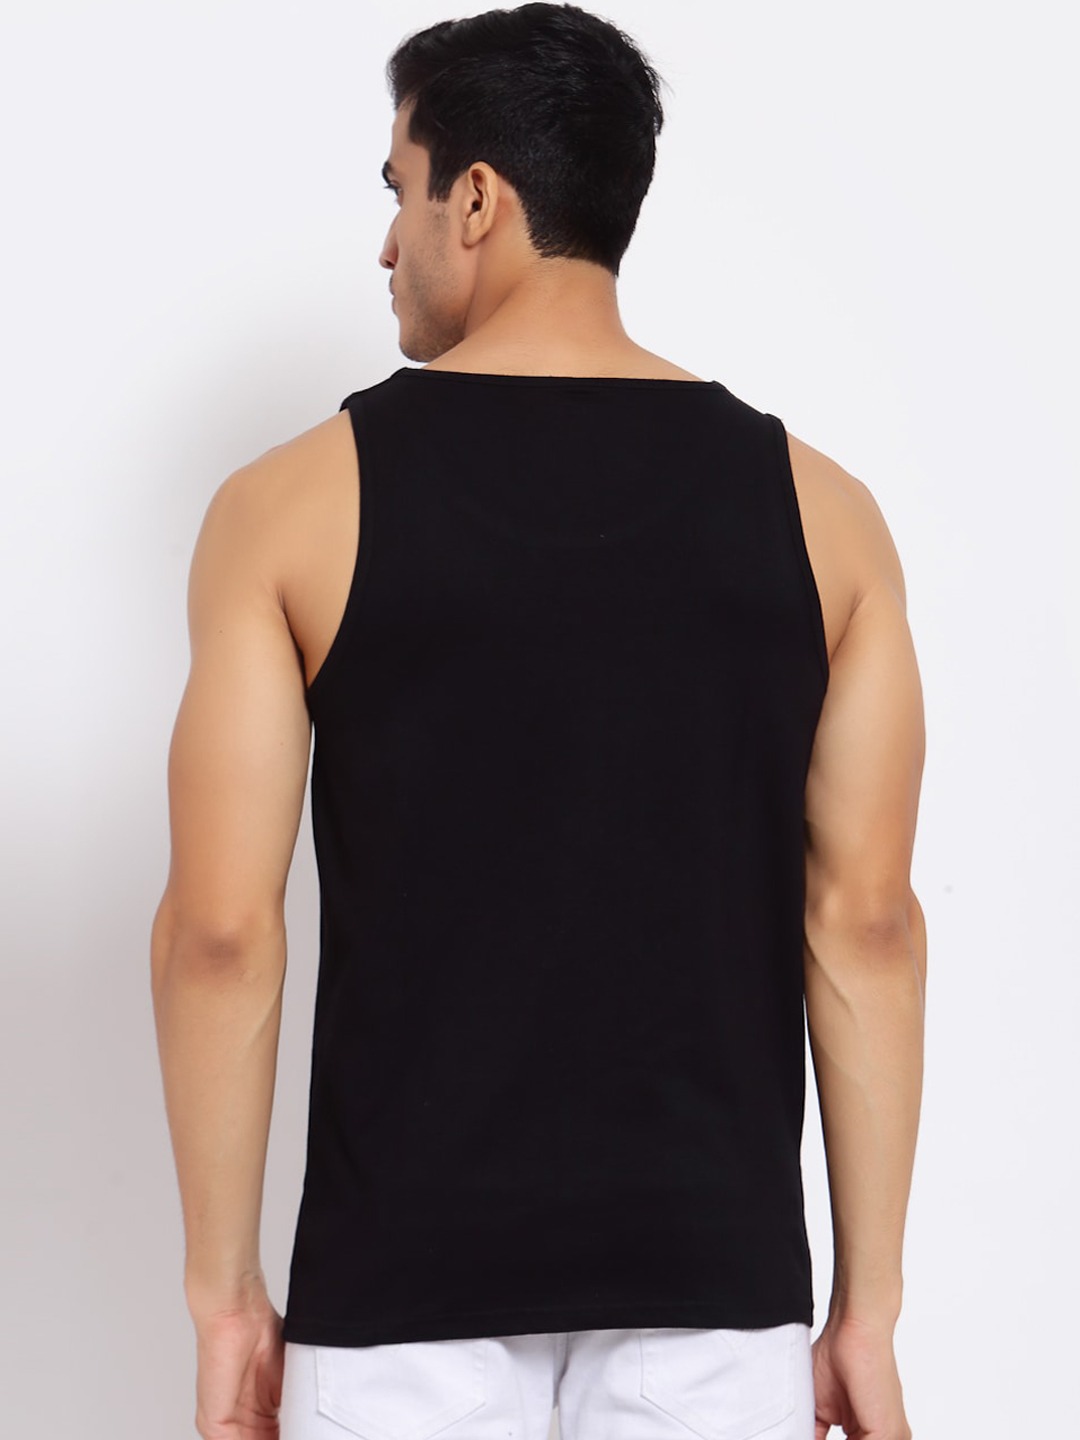 Clothing Innerwear Vests | FERANOID Men Pack of 2 Maroon & Black Solid Cotton Gym Vest - AQ64605